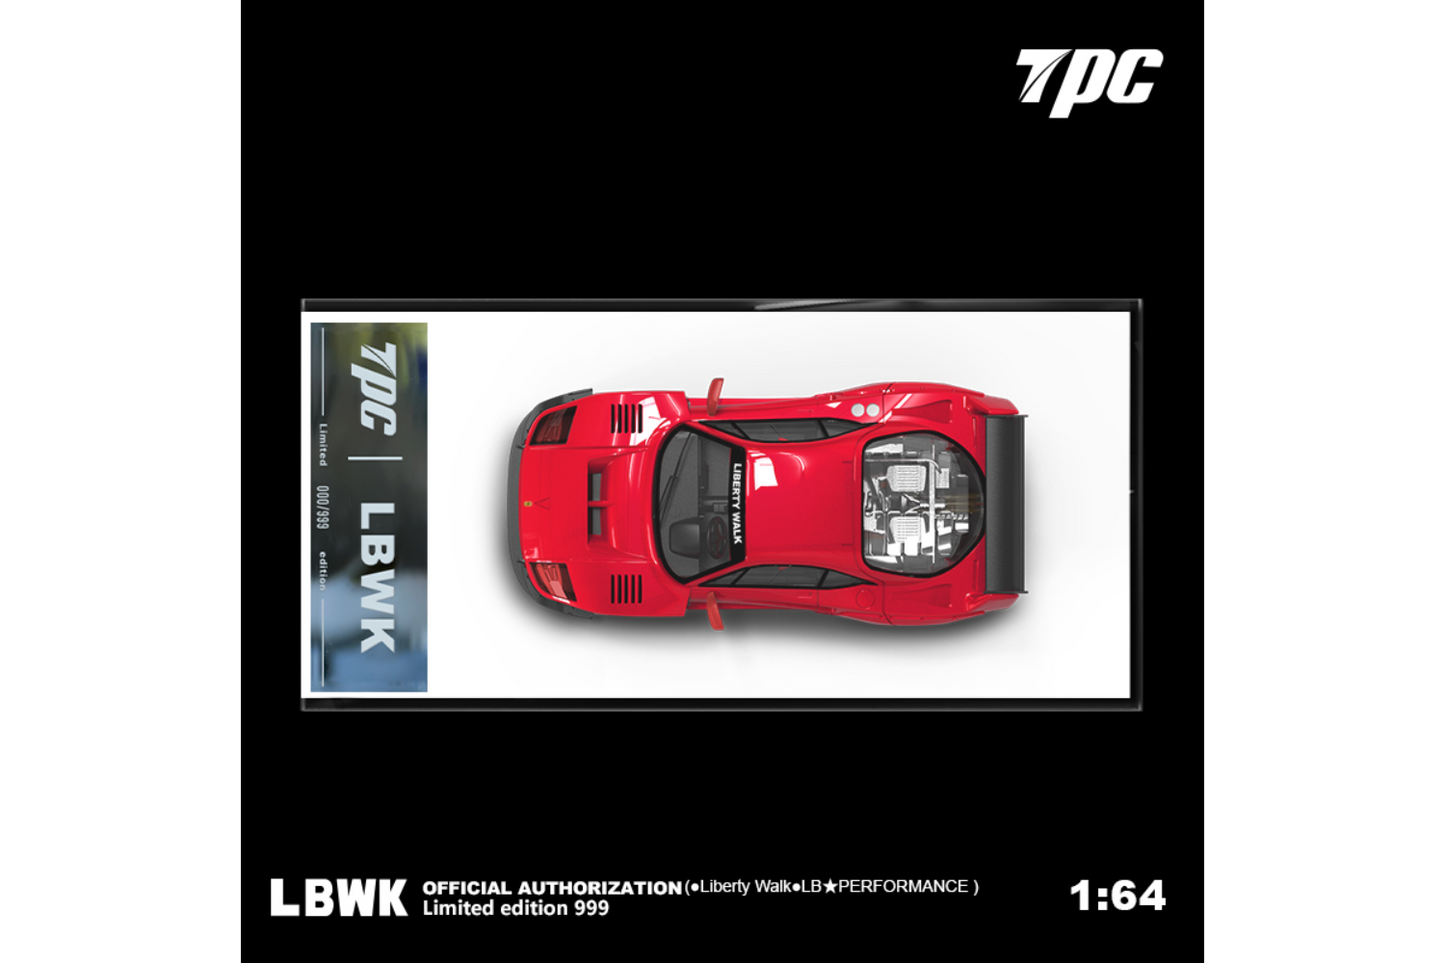 TPC 1/64 LBWK Ferrari F40 in Red